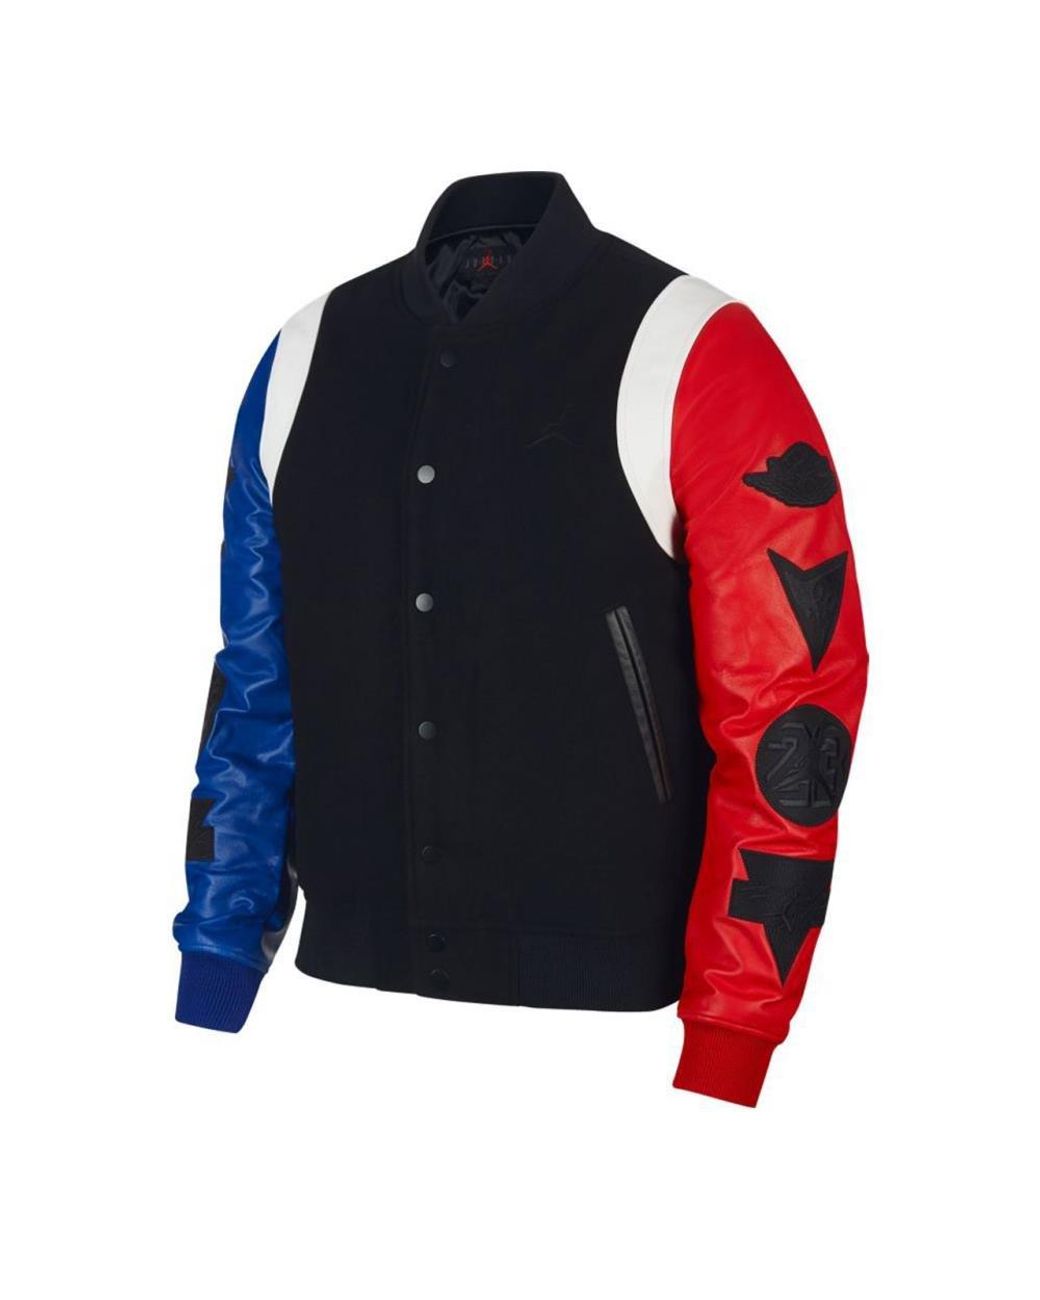 red white and blue jordan jacket